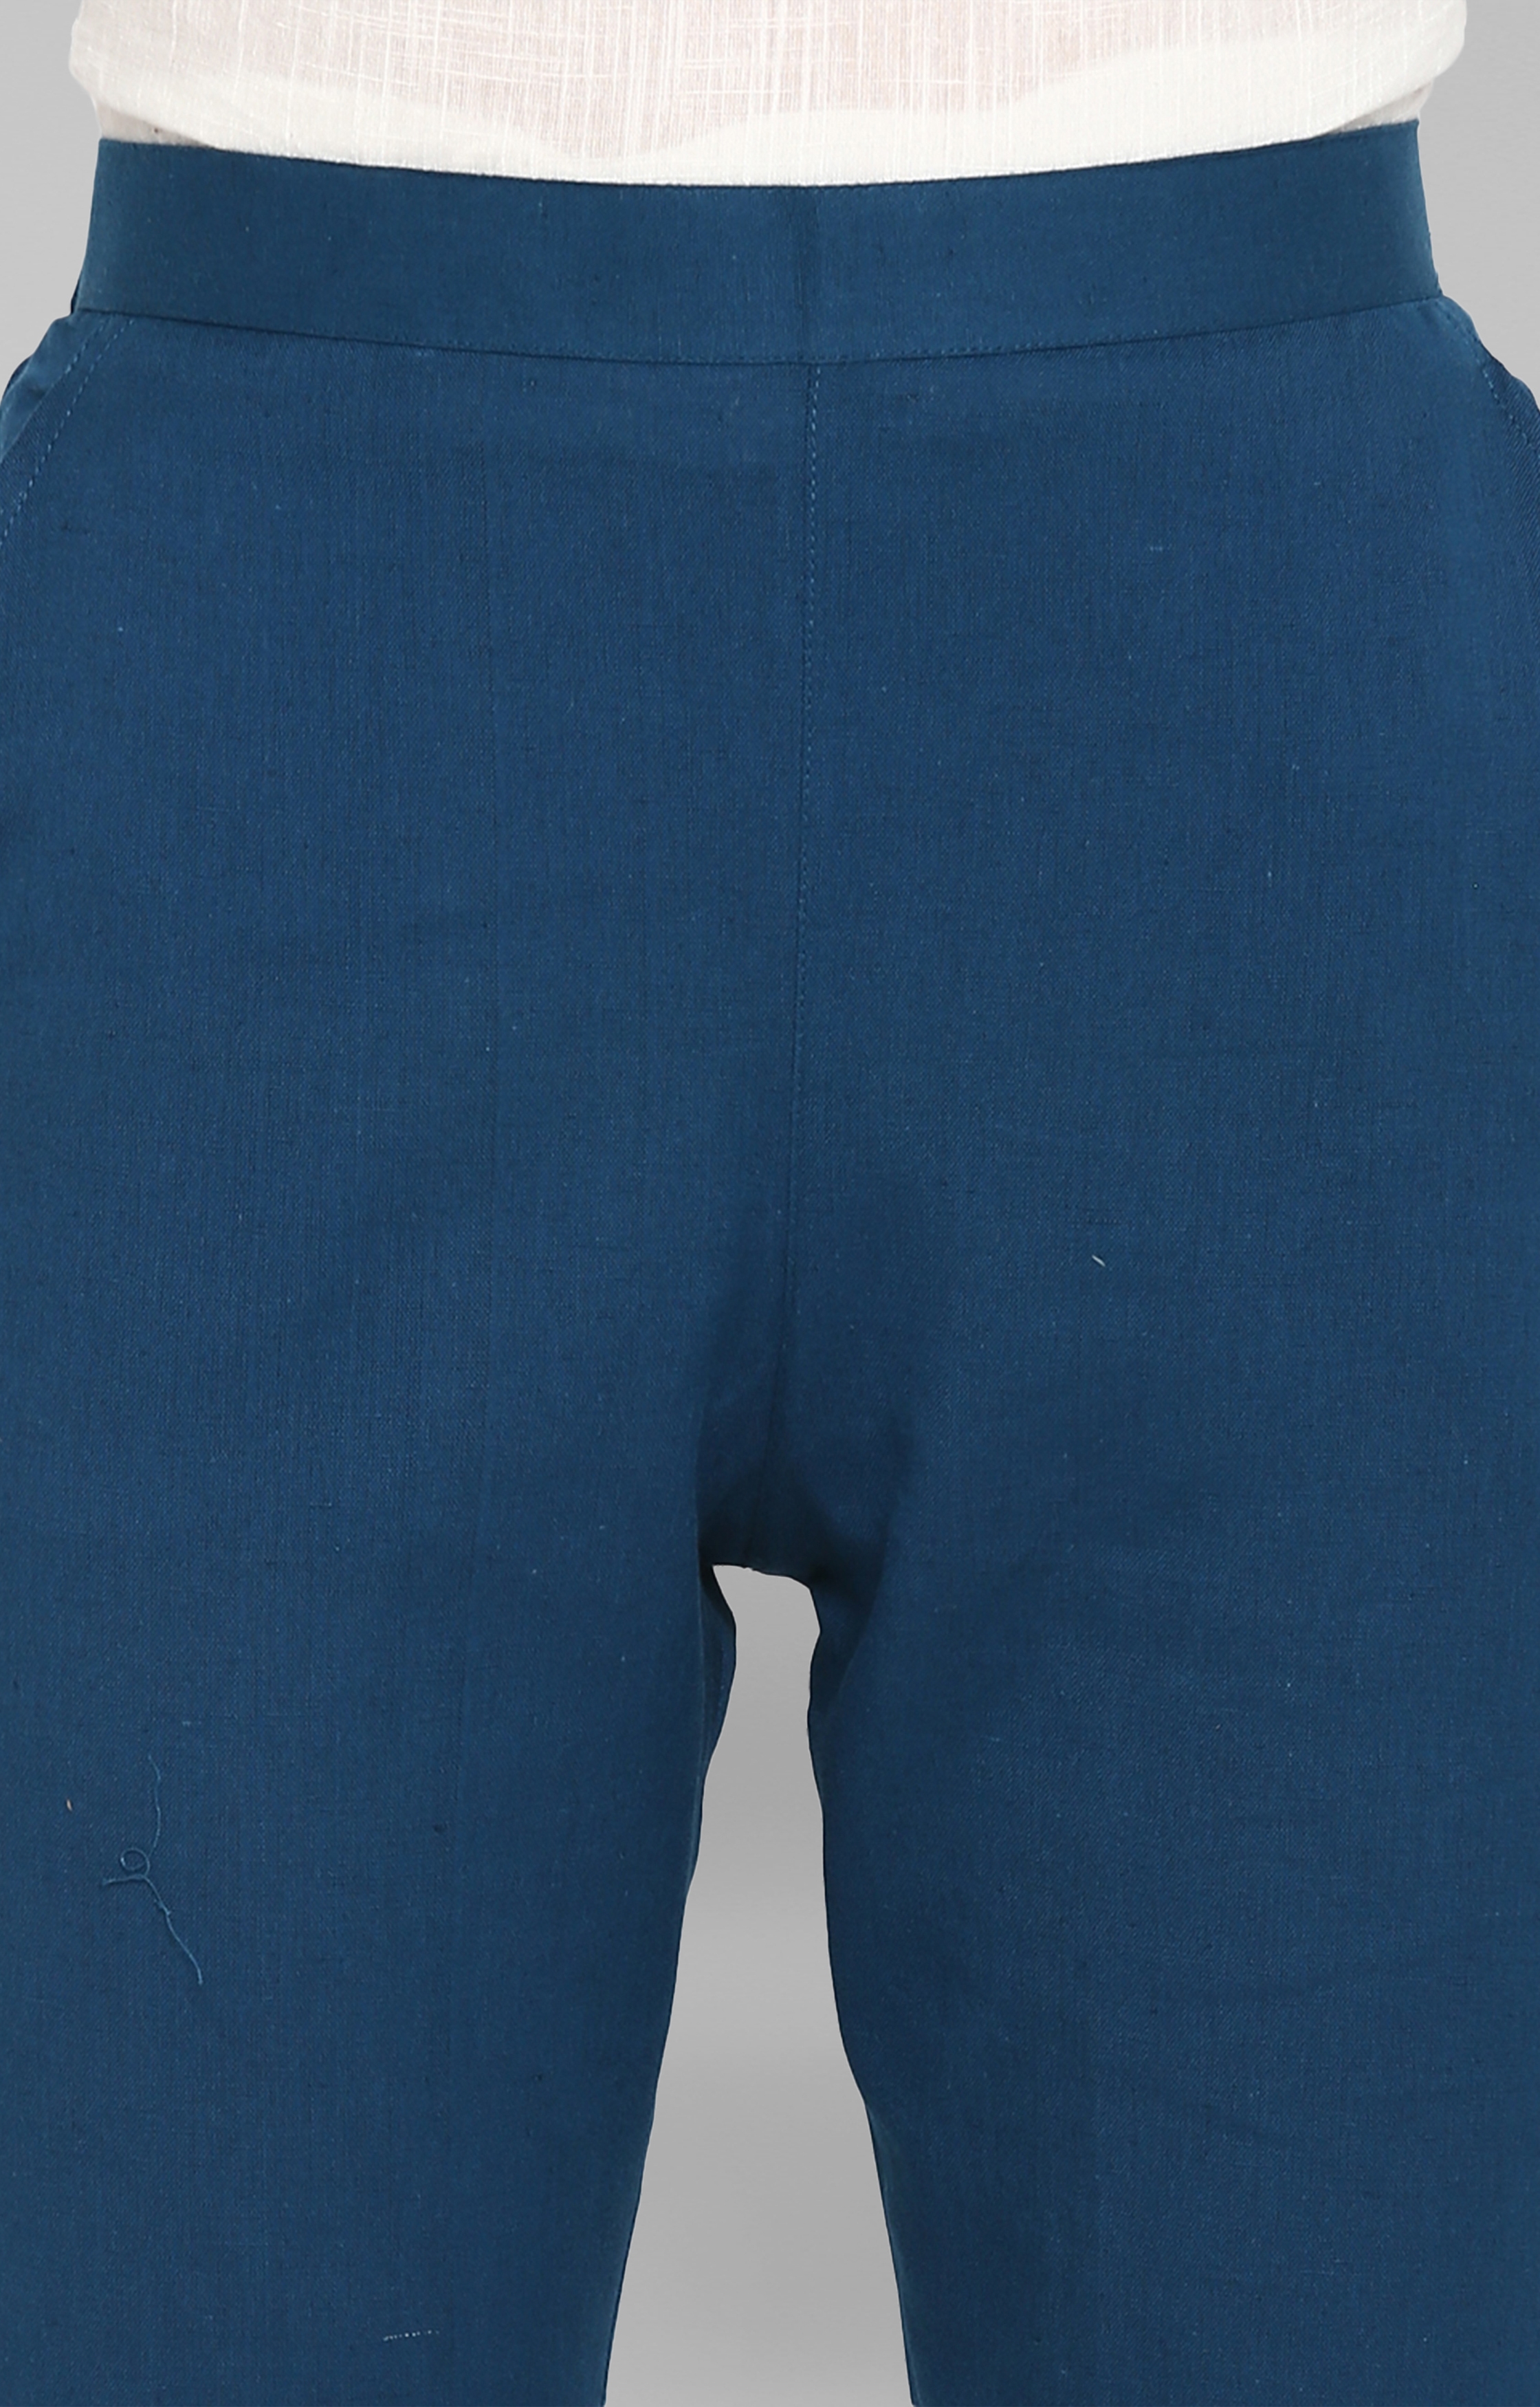 Janasya | Janasya Women's Turquoise Blue Solid Pure Cotton Narrow Pant 4